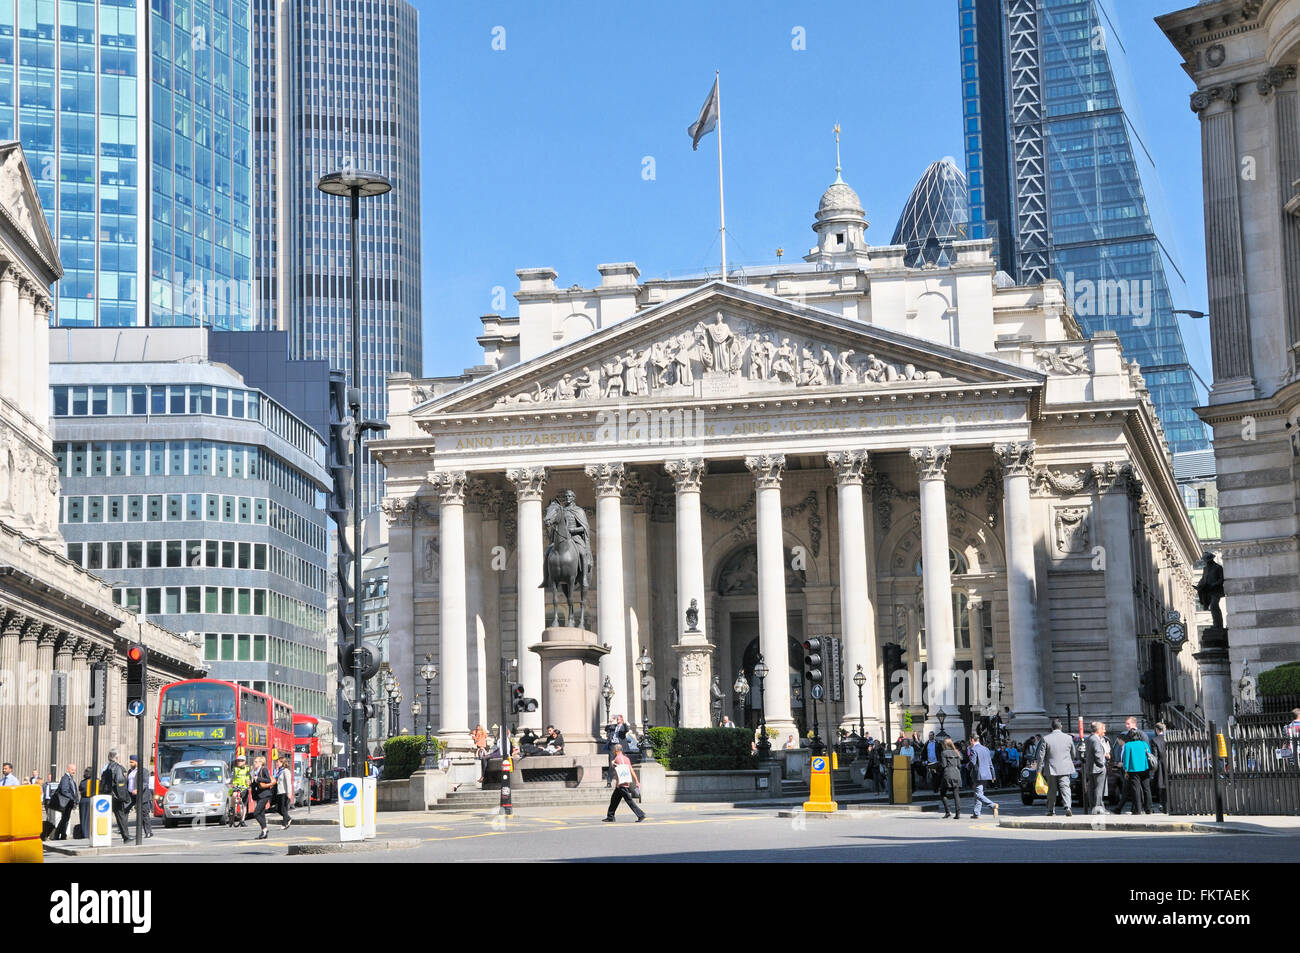 The Royal Exchange, Threadneedle Street, City of London, UK Stock Photo